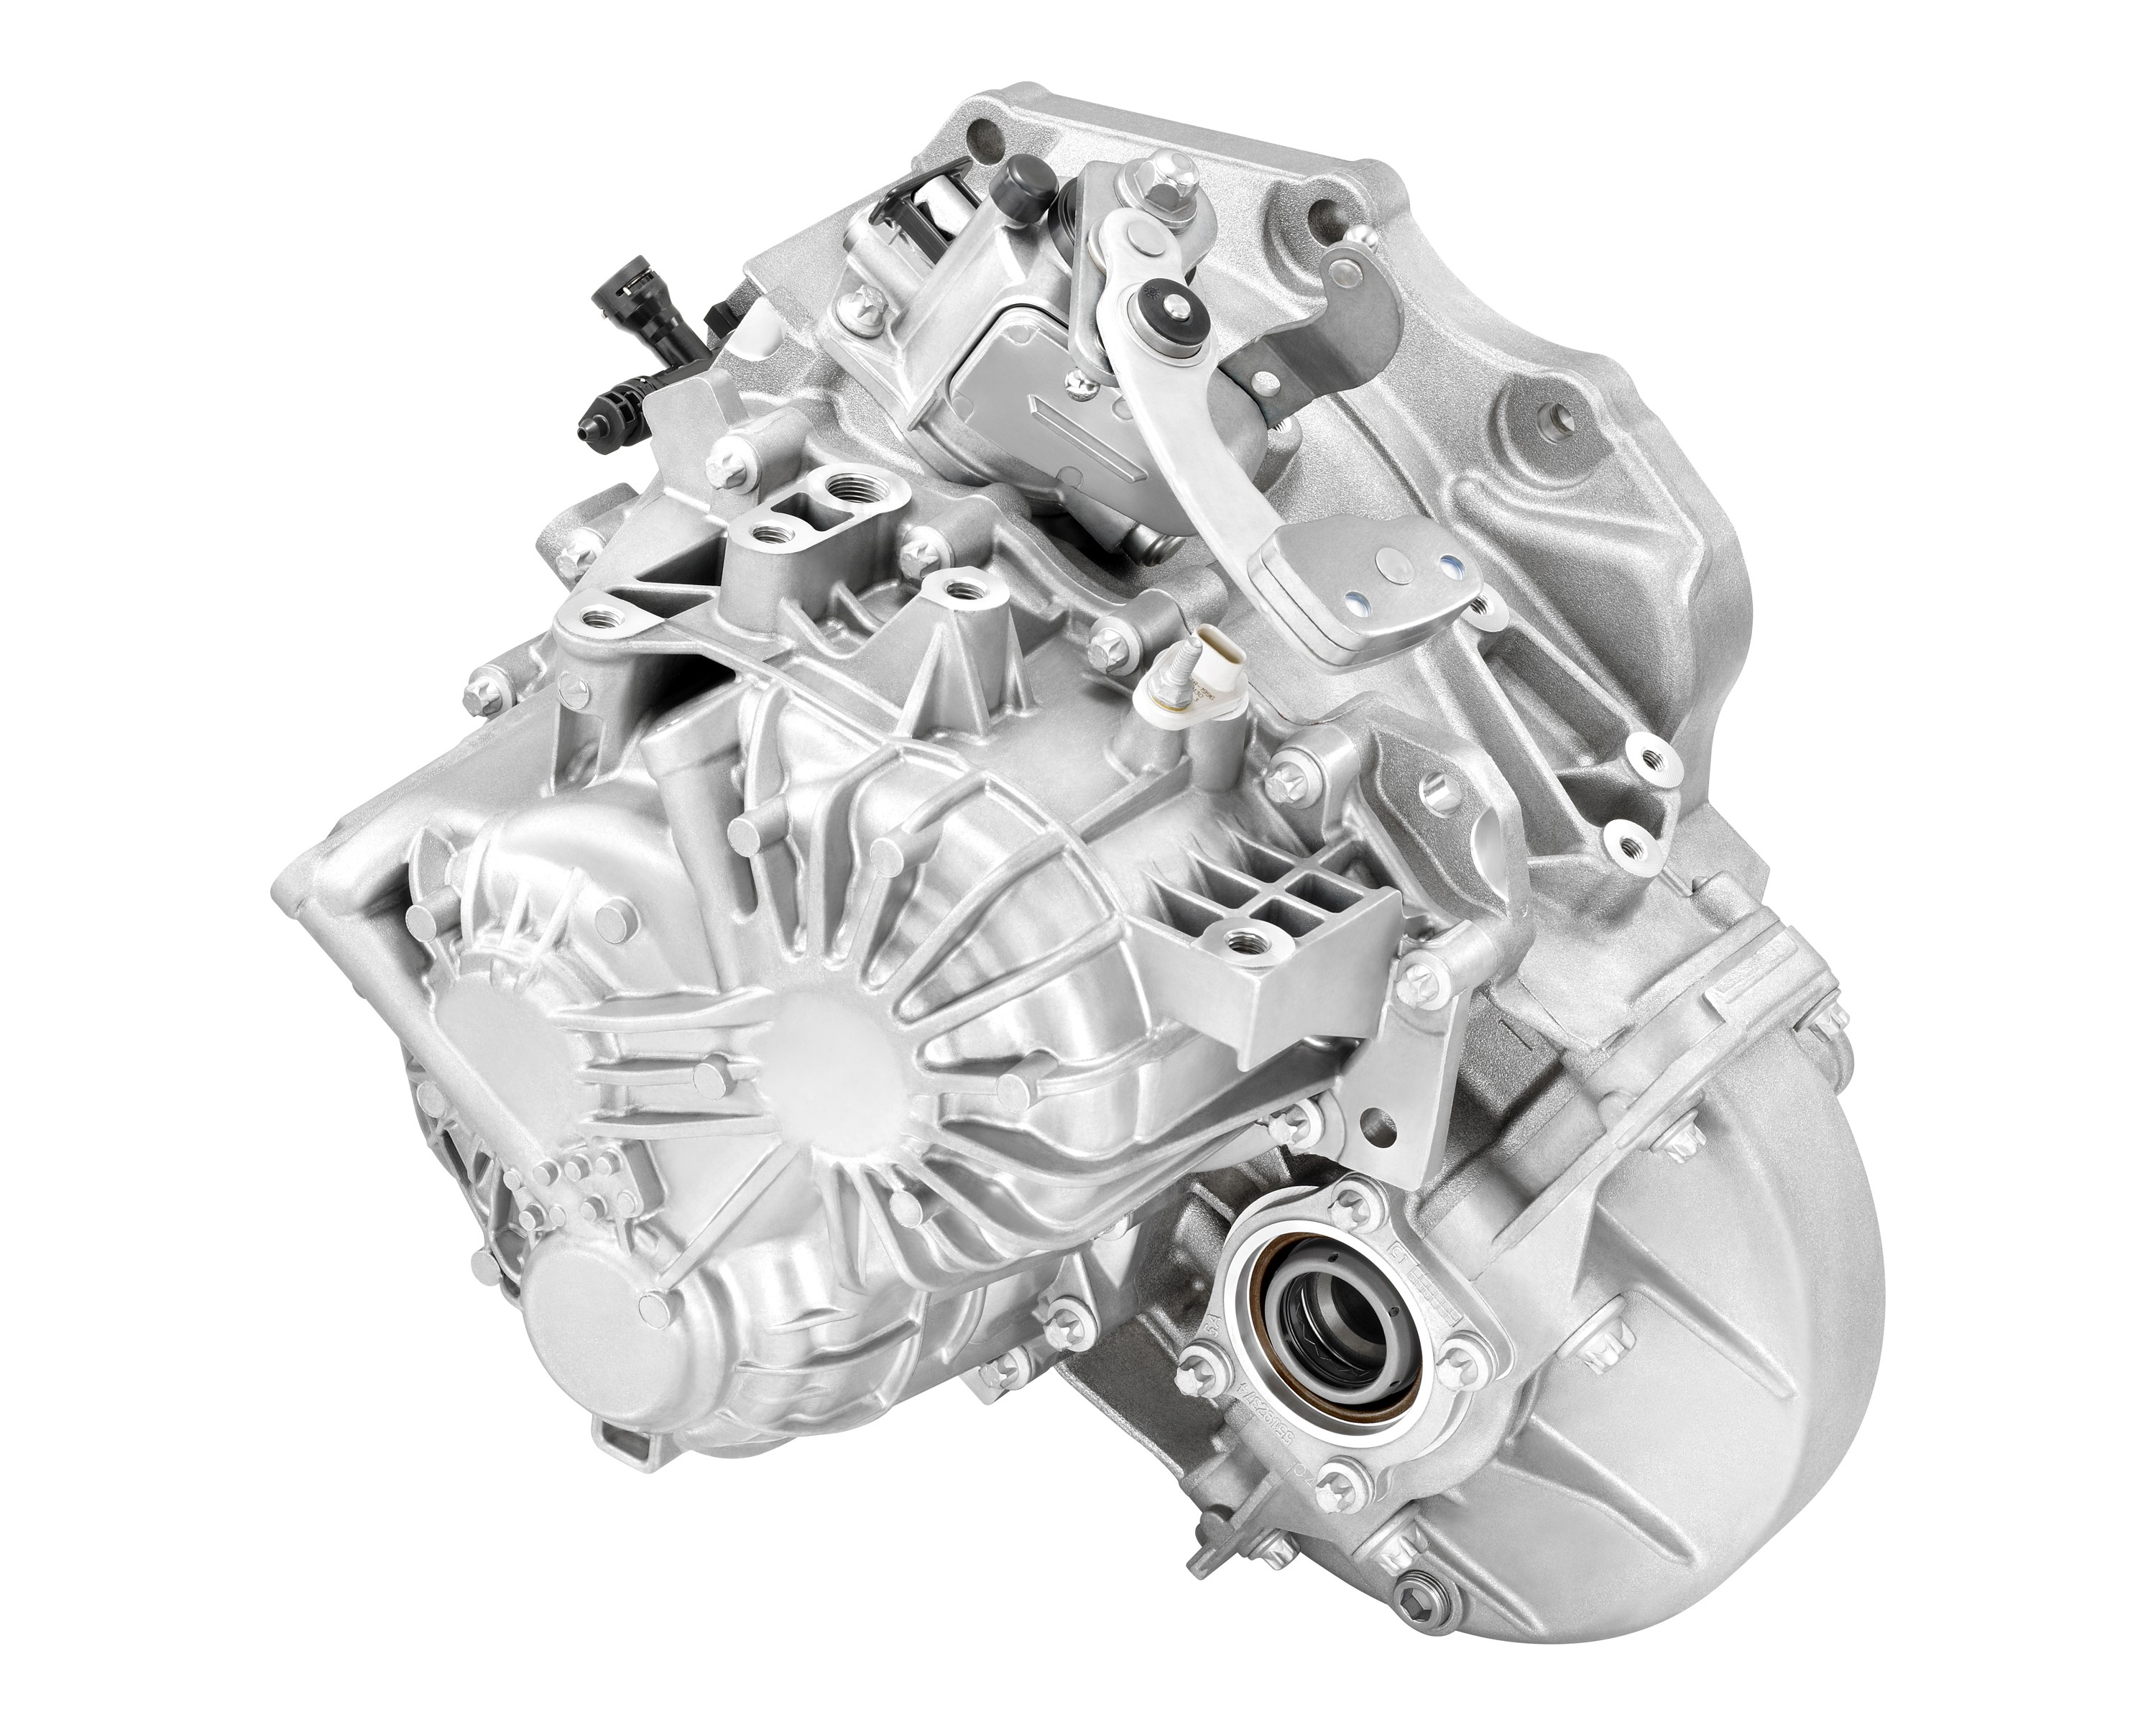 2019-chevrolet-cruze-gains-cvt-as-standard-optional-15-liter-turbo-engine_15.jpg